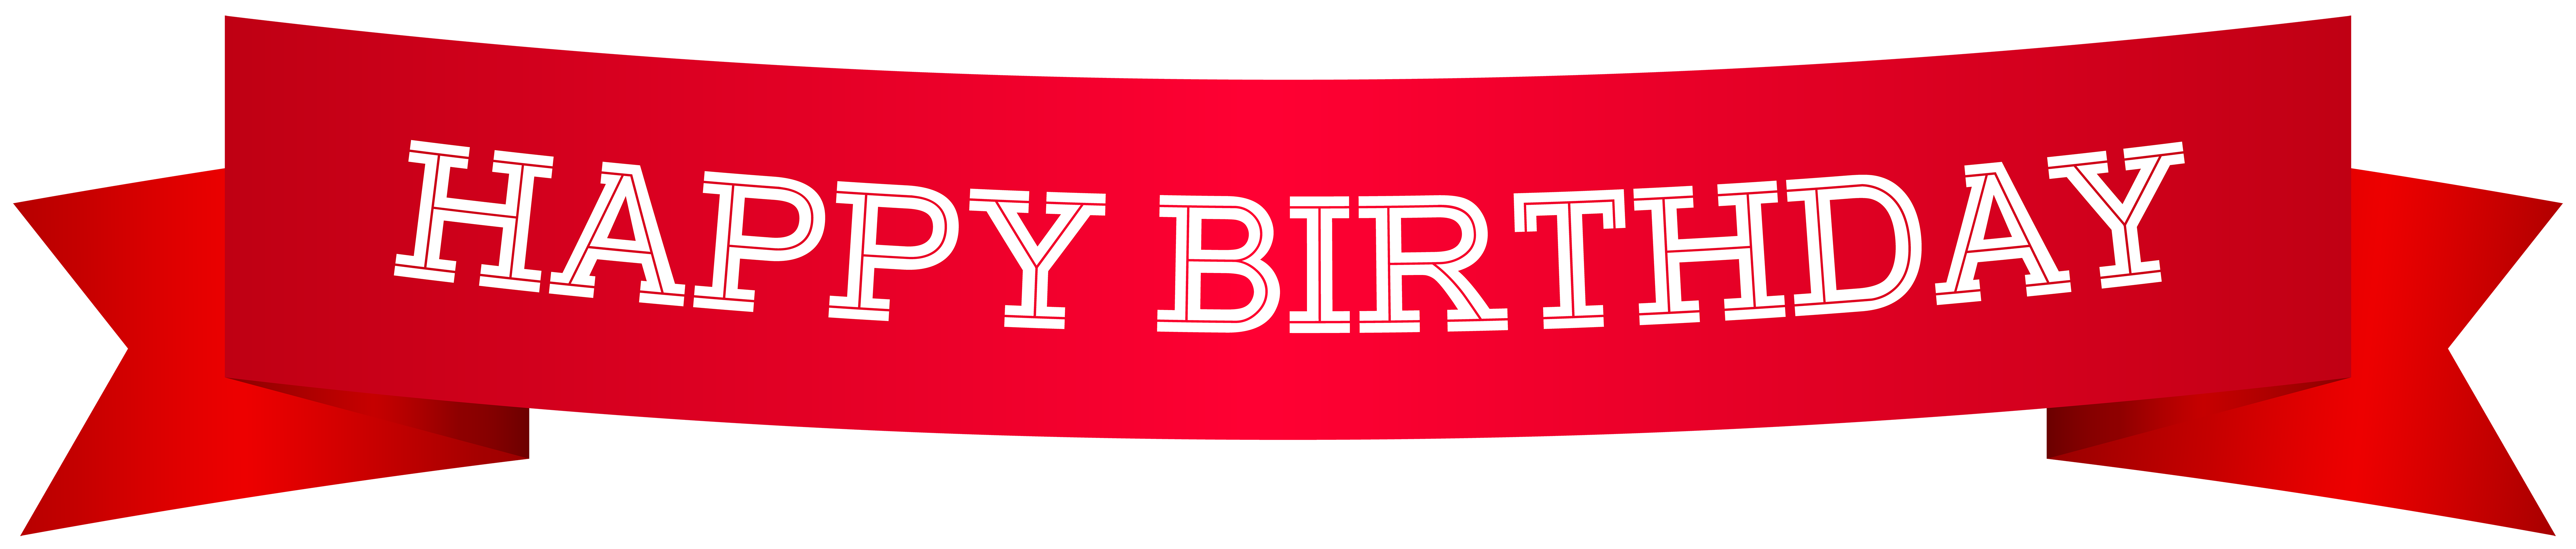 banner-birthday-clip-art-happy-birthday-banner-red-png-clip-art-image